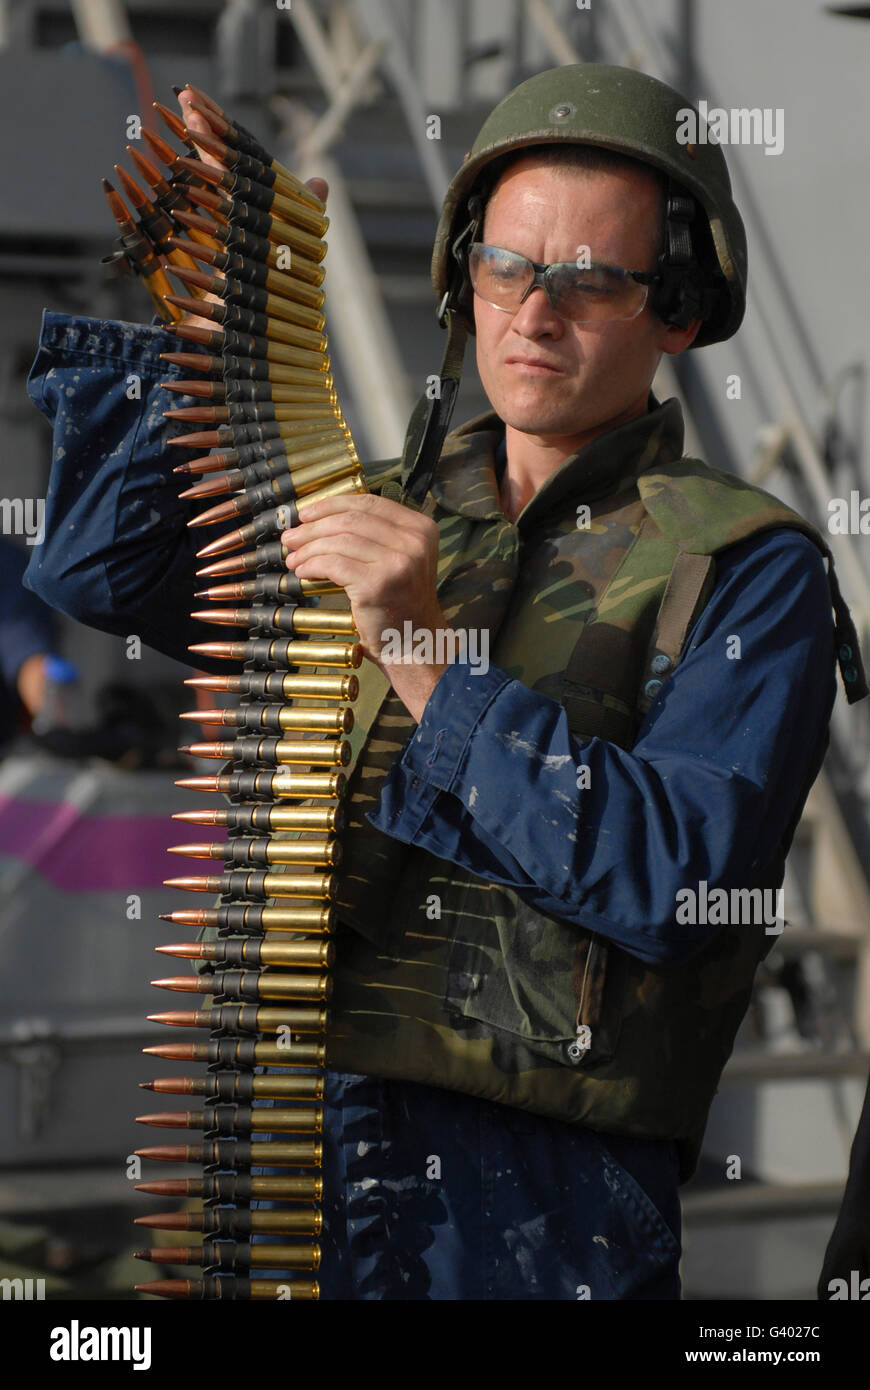 Seaman prepares to load ammunition into an M240 machine gun. Stock Photo